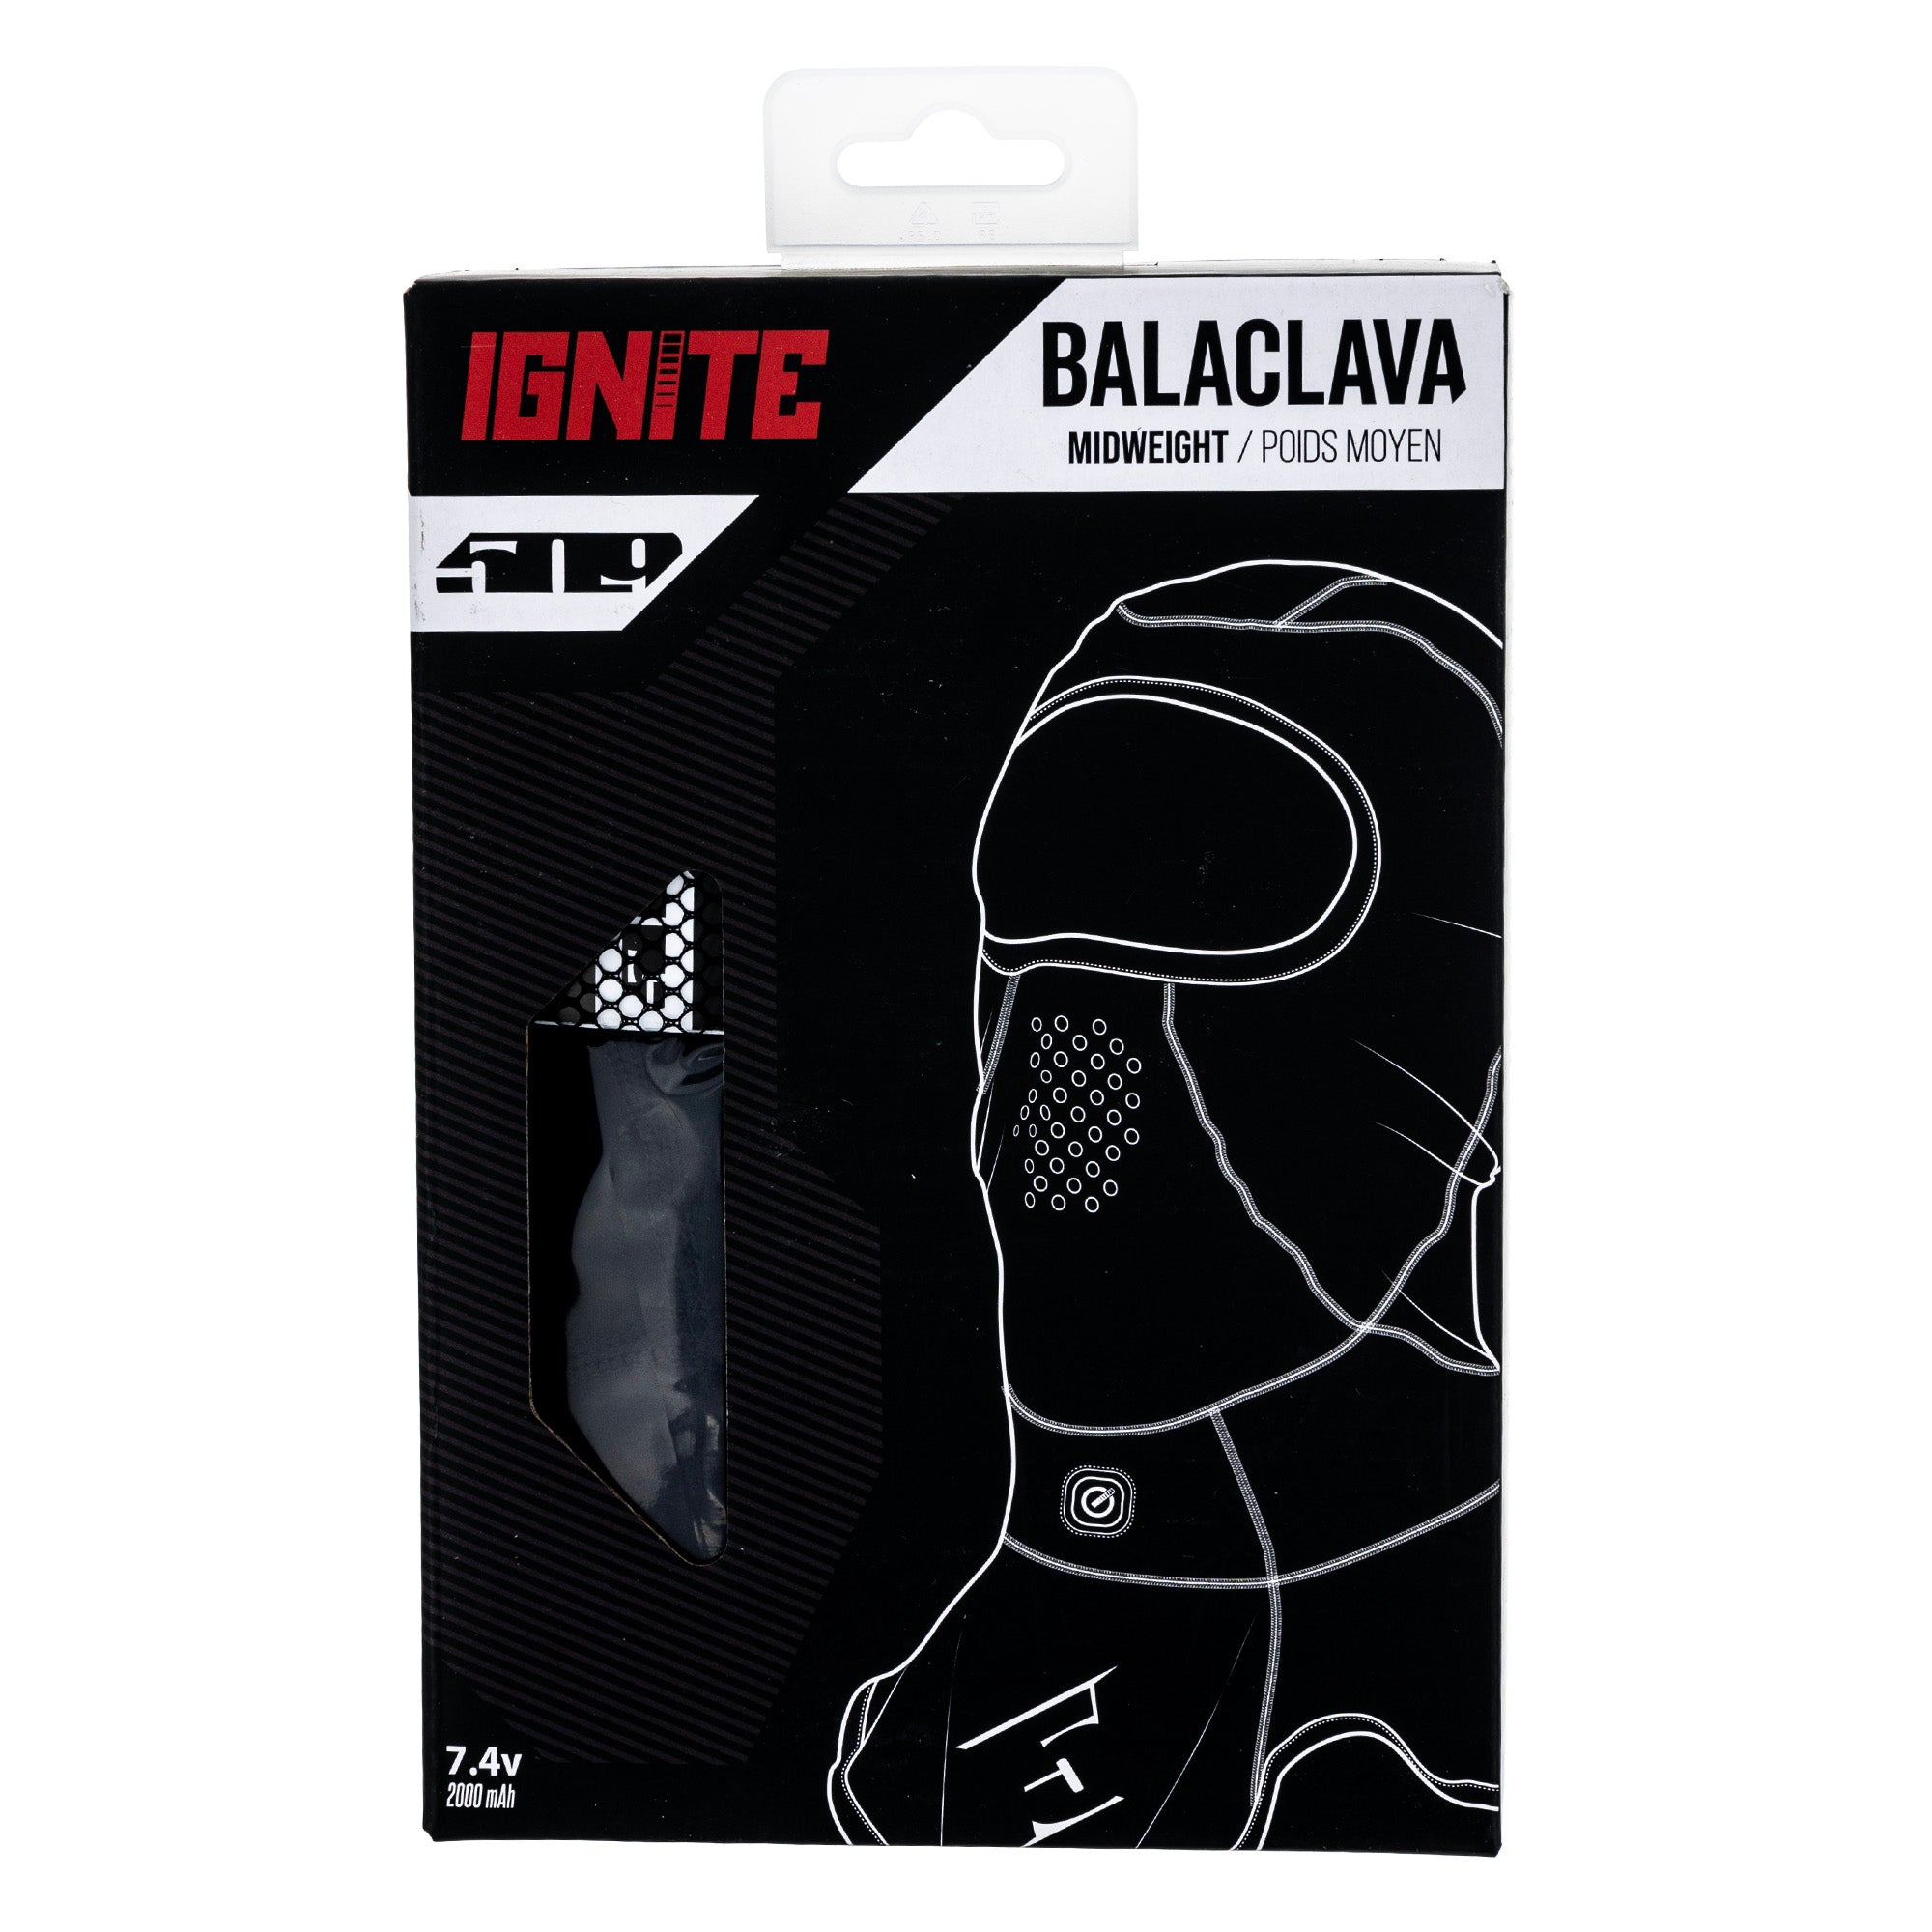 509 F10000900-000-001 Ignite Balaclava Heated Soft Warm Windproof Comfortable Blend Black